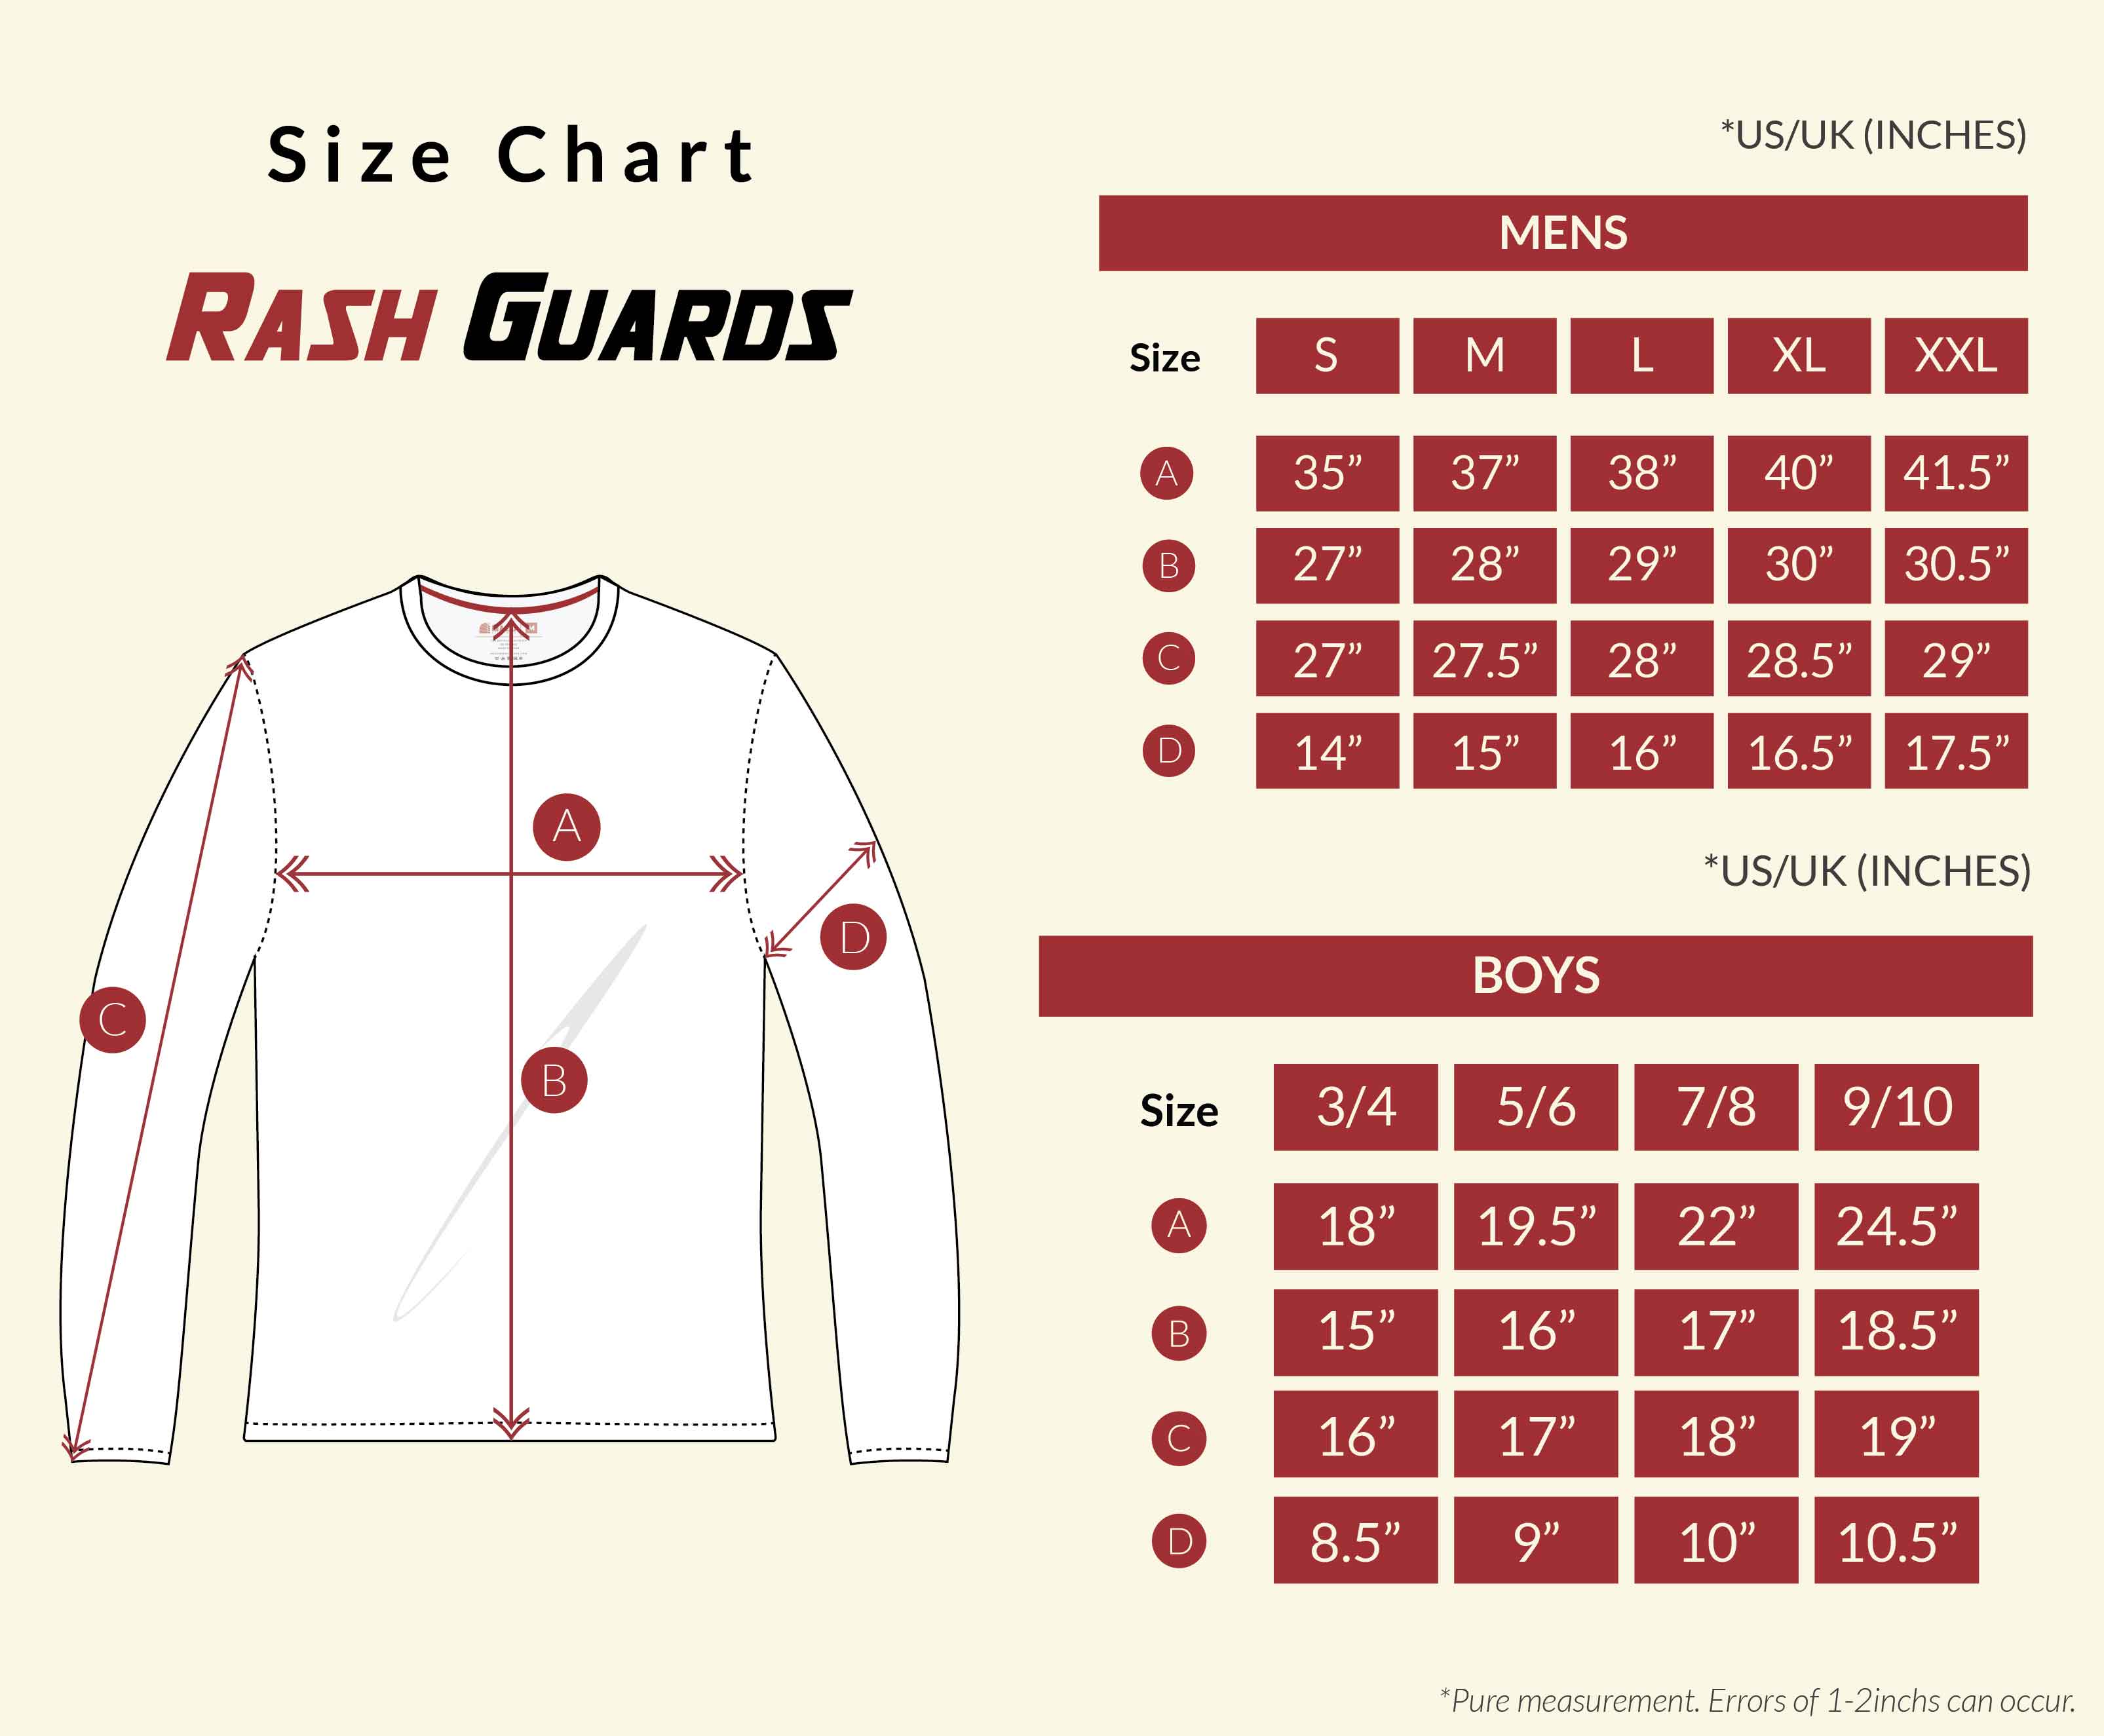 Junior Rashguard Size Chart